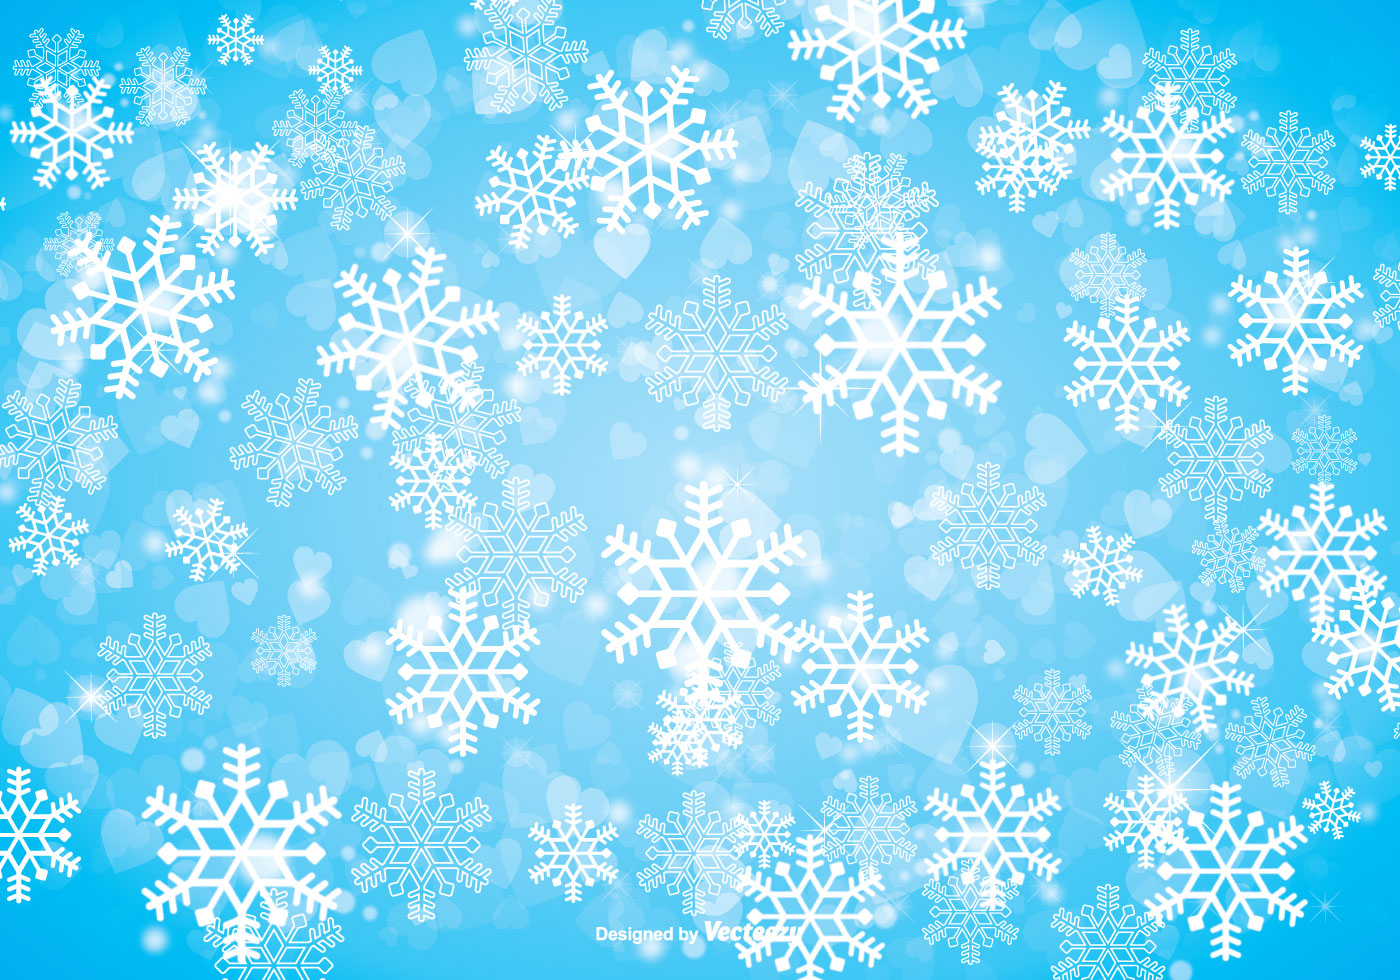 free clipart snowflakes background - photo #15